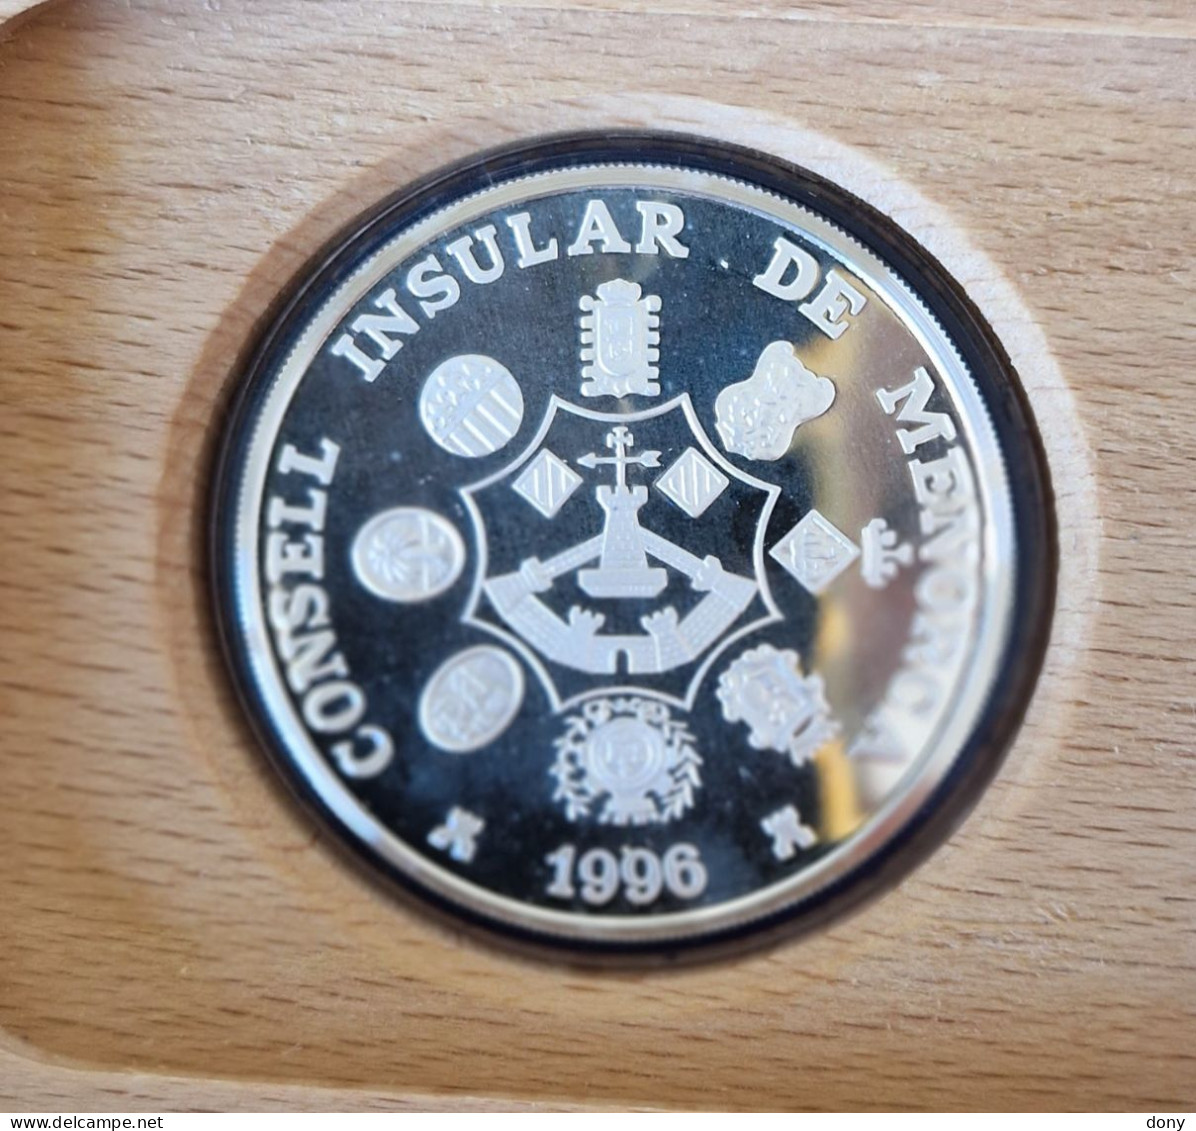 Moneda 5 Ecu Plata 999 1996 Consell Insular De Menorca, España 1 Onza Oz Silver. Certificado Y Caja - Prove & Monete Ribattute